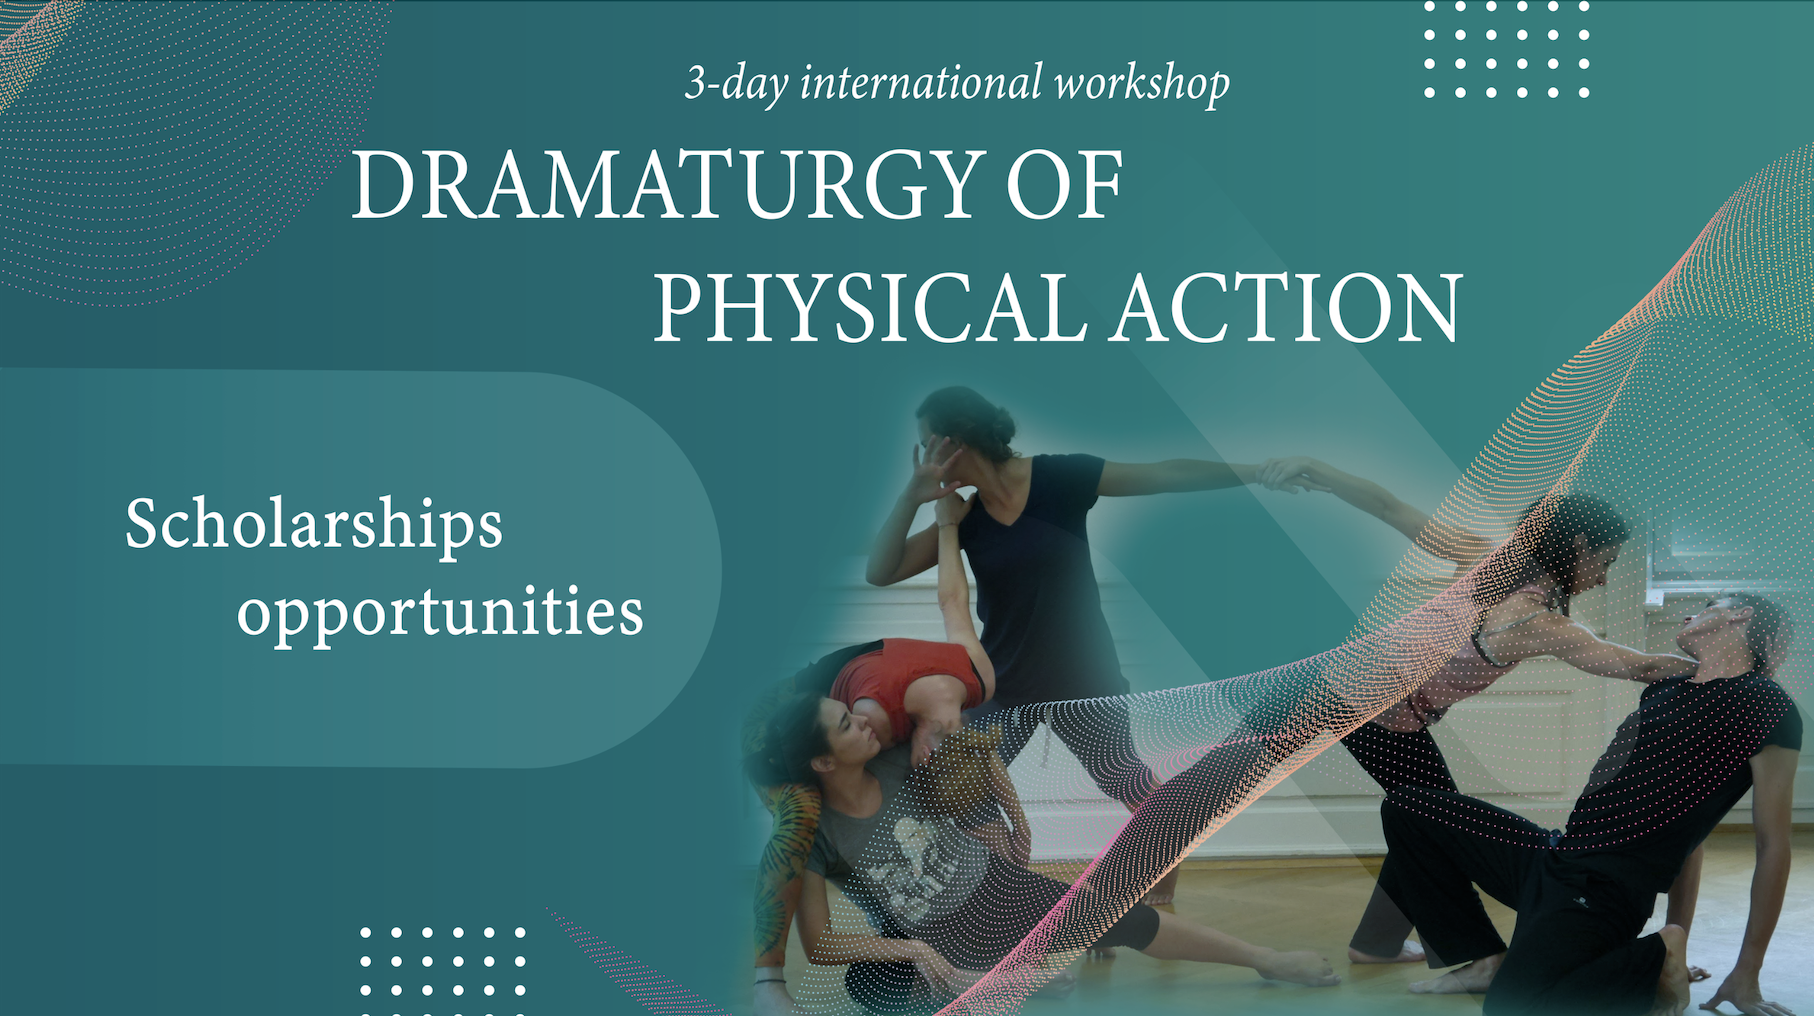 3-day international workshop "DRAMATURGY OF PHYSICAL ACTION", Grand Studio, Brussels - Belgium,Bruxelles-Capitale,Belgium